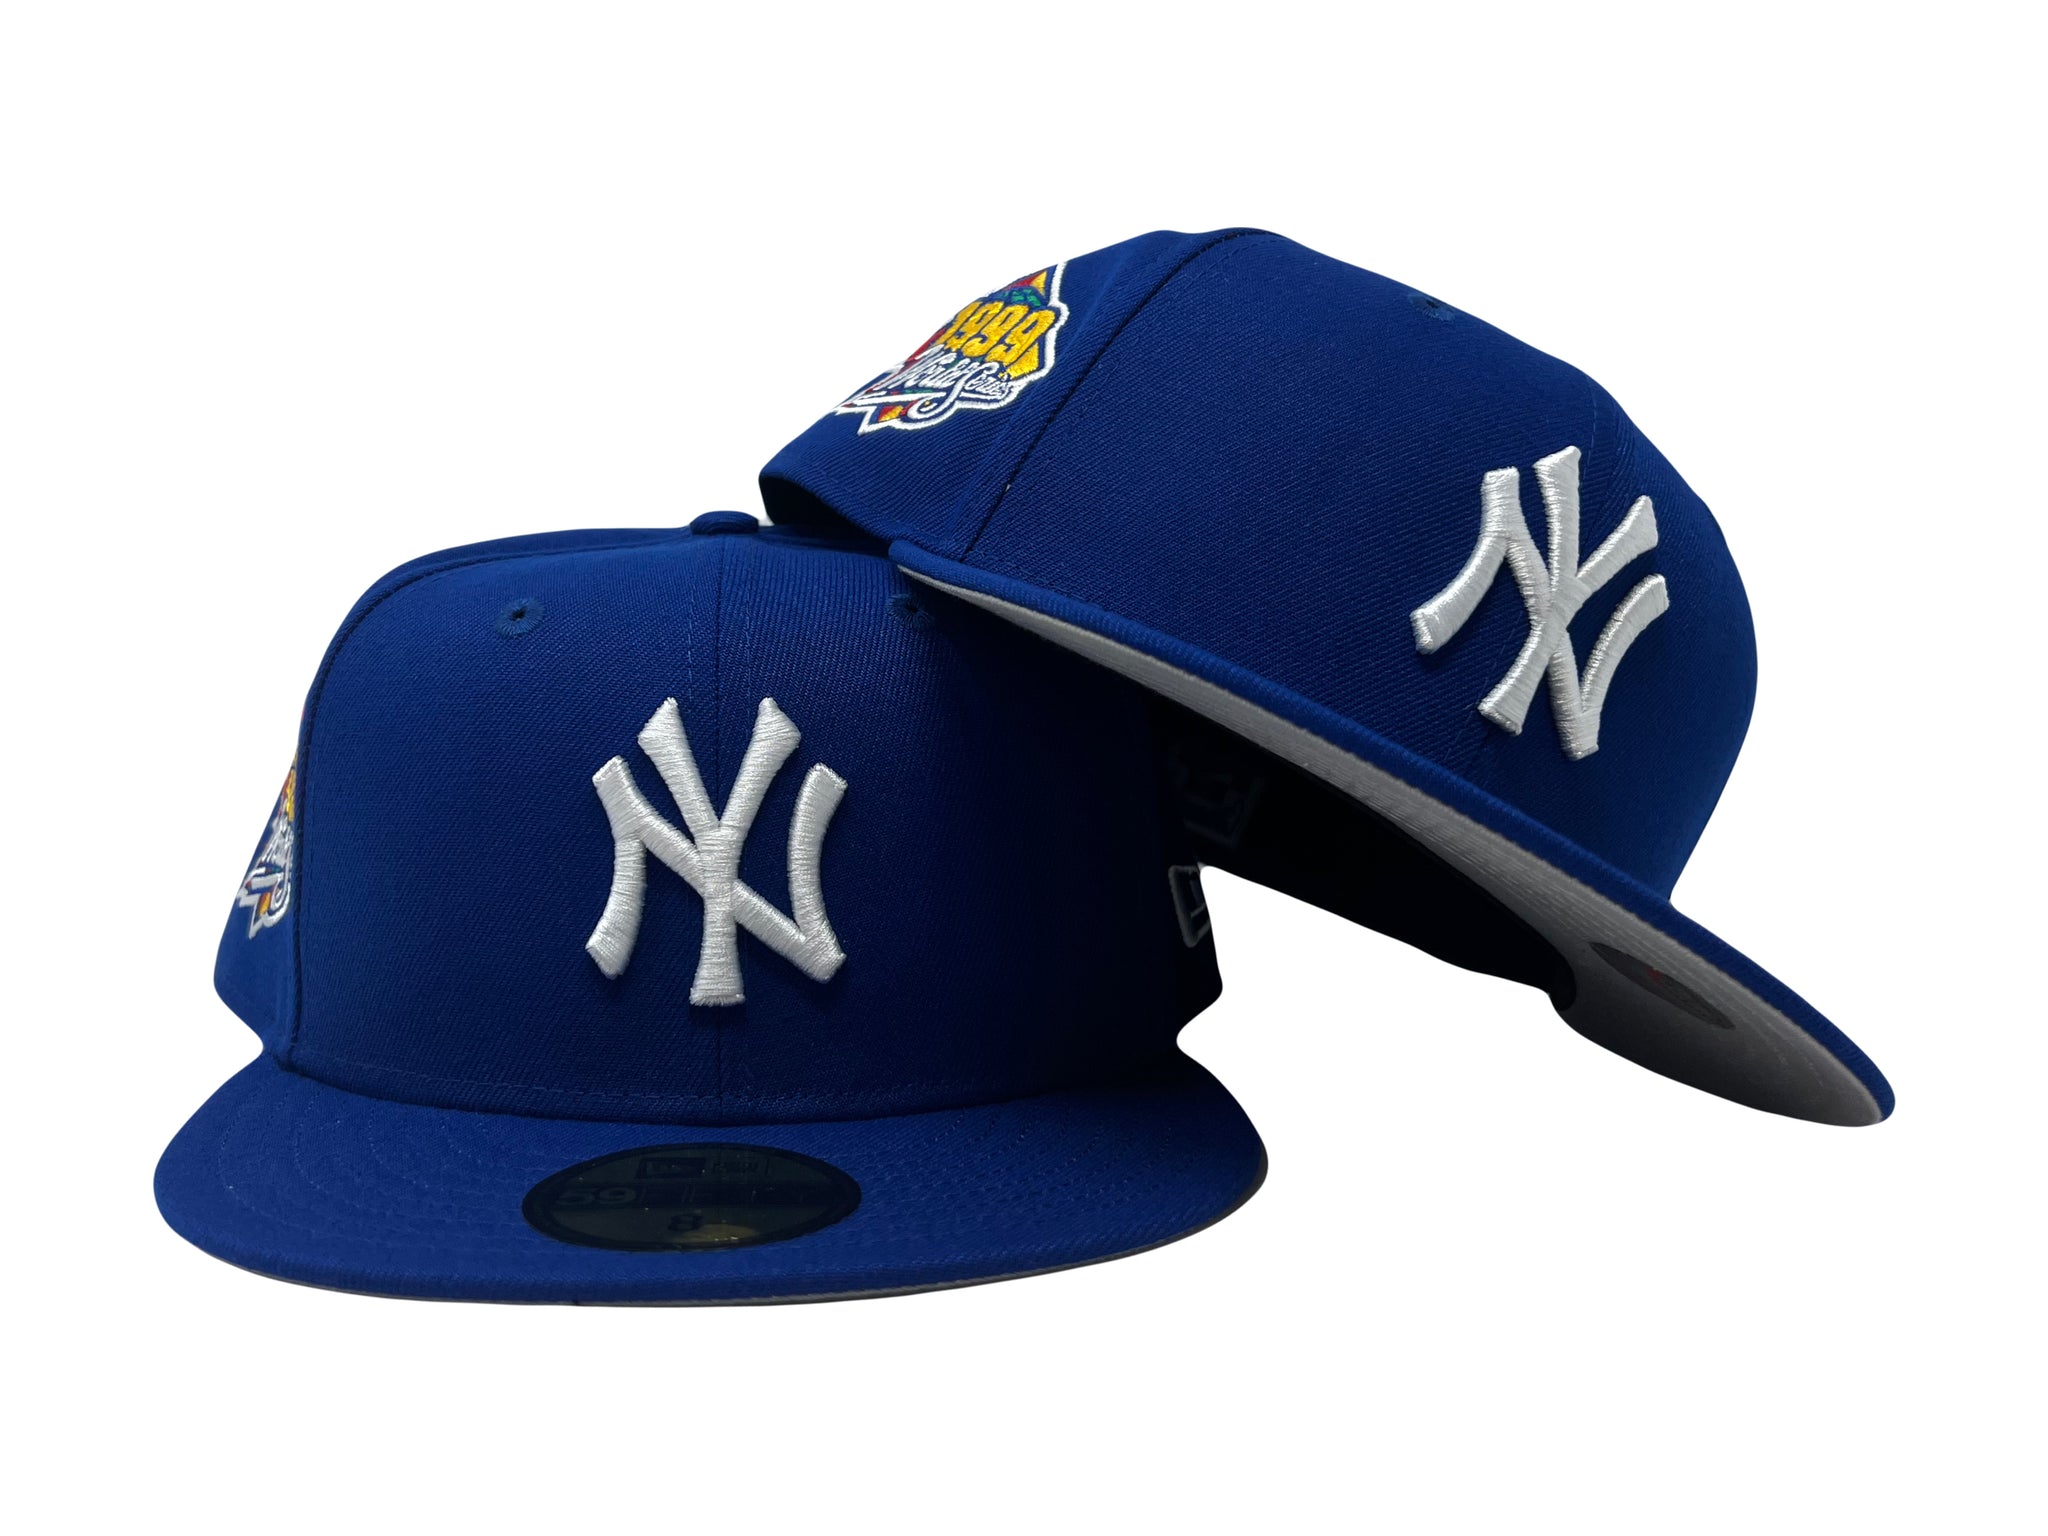 New York Yankees New Era 5950 Basic Fitted Hat - Royal/White